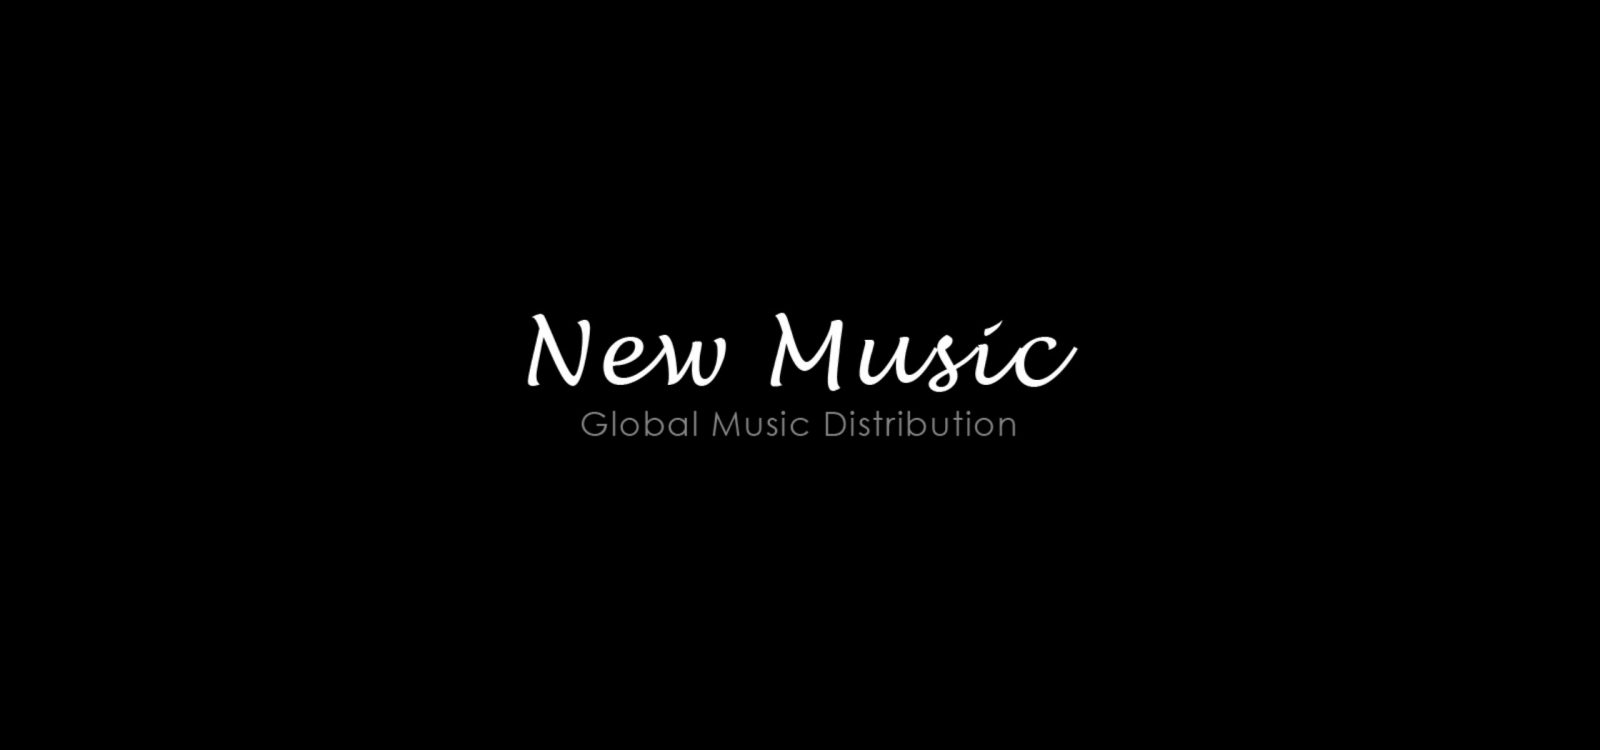 New Music top - Global Music Distribution